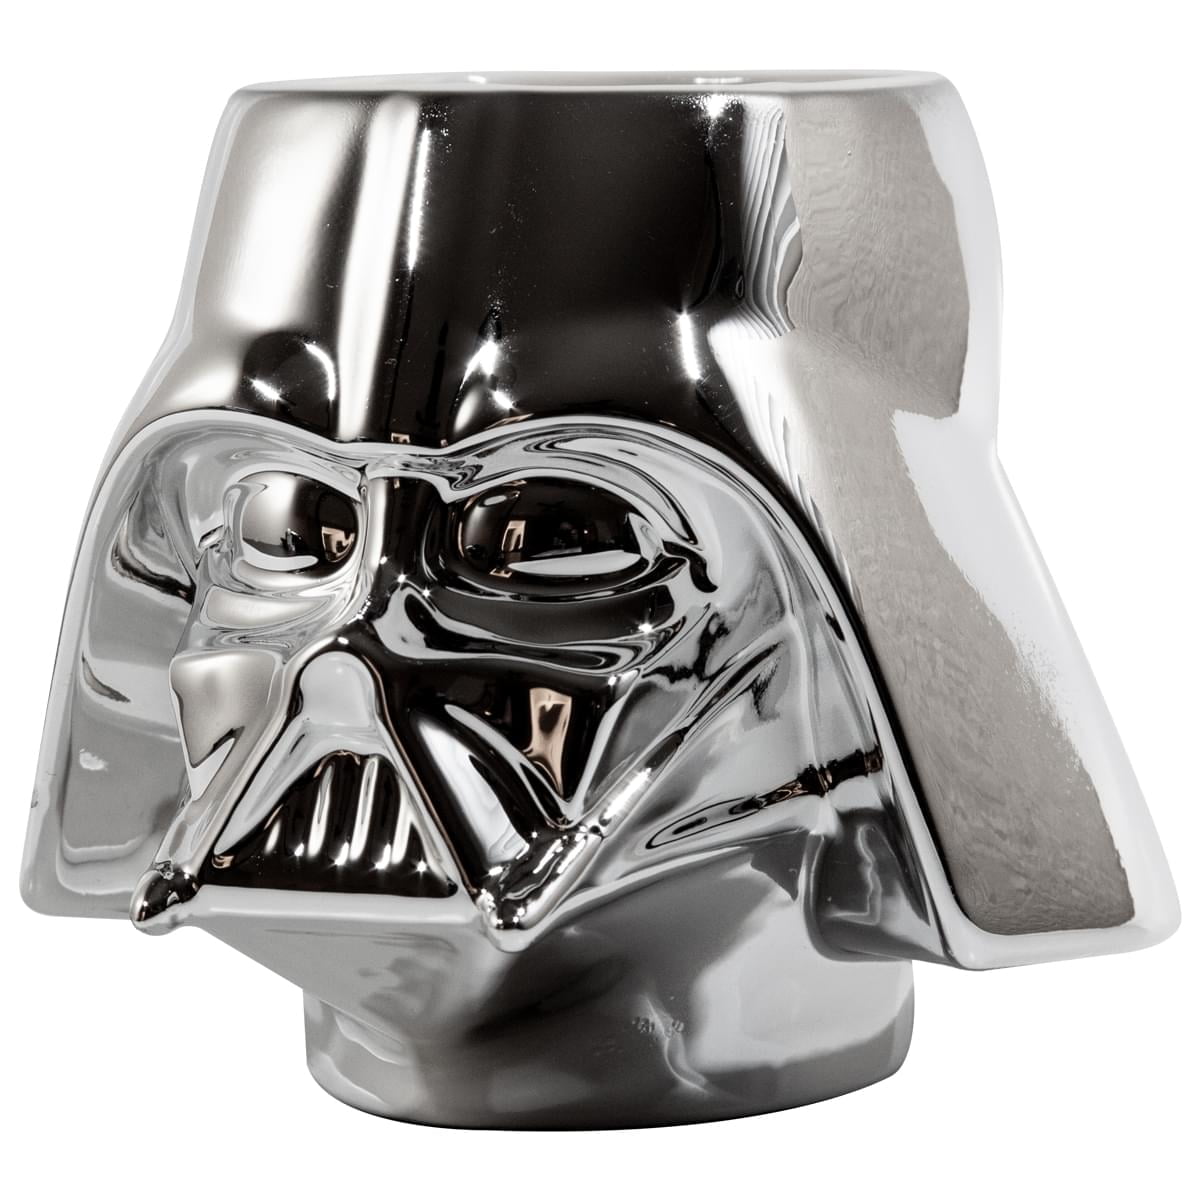 Details about   RARE DISNEY Star Wars Darth Vader CERAMIC MUG MINT in Giftbox 2016 Lucasfilm 